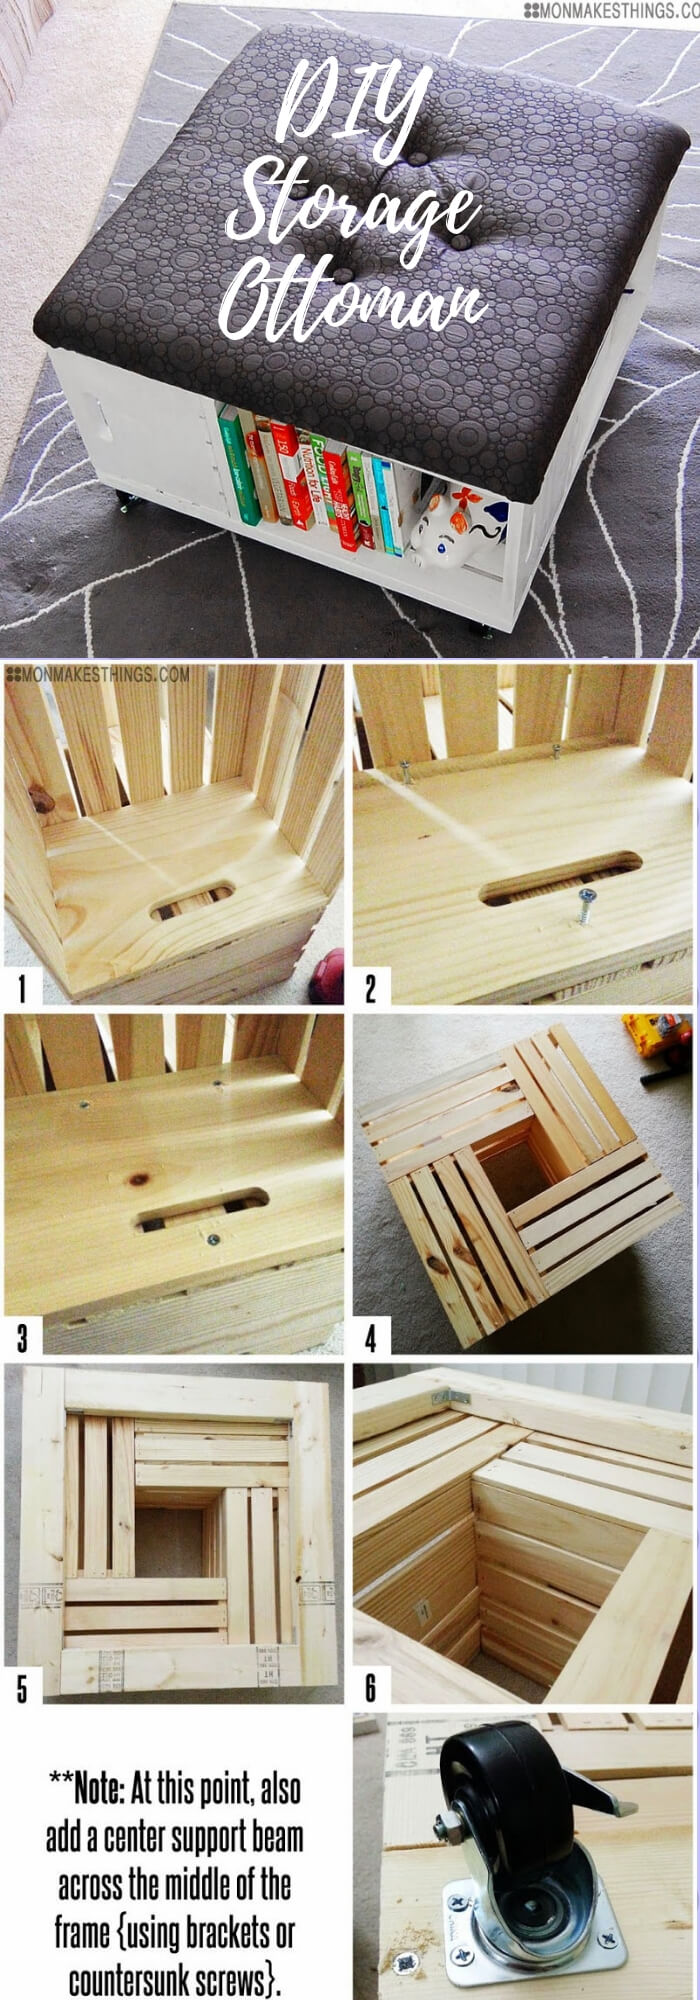 DIY Storage Ottoman | Best DIY Wood Crate Projects & Ideas